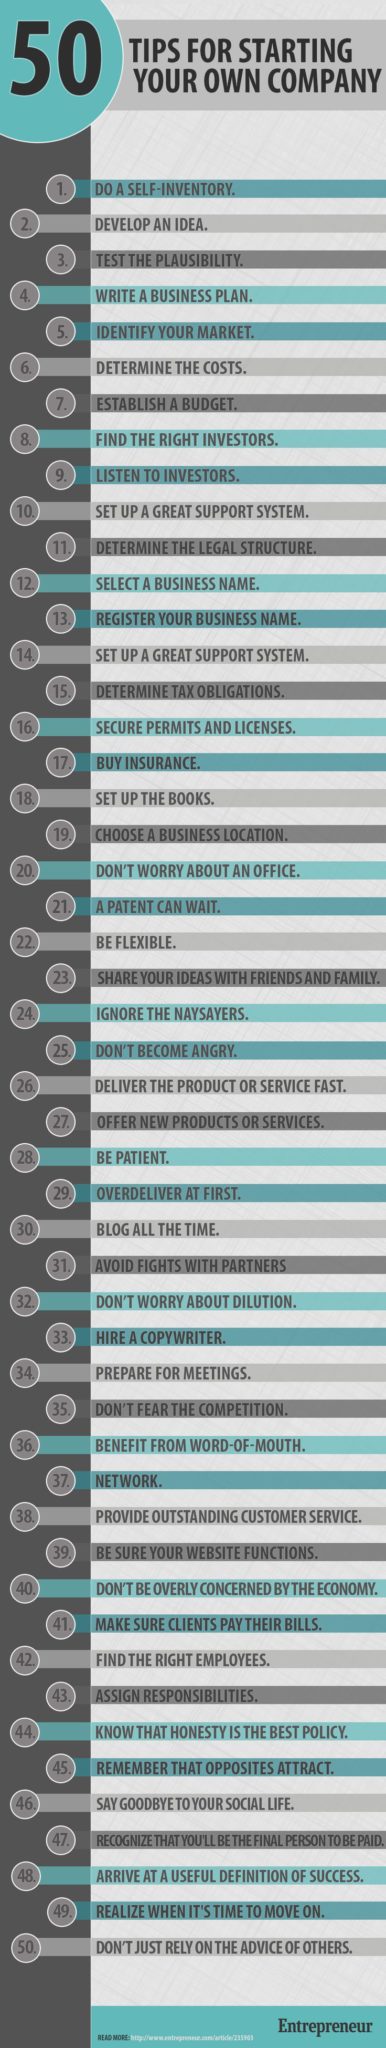 Entrepreneur-Magazine-Infographic (1)